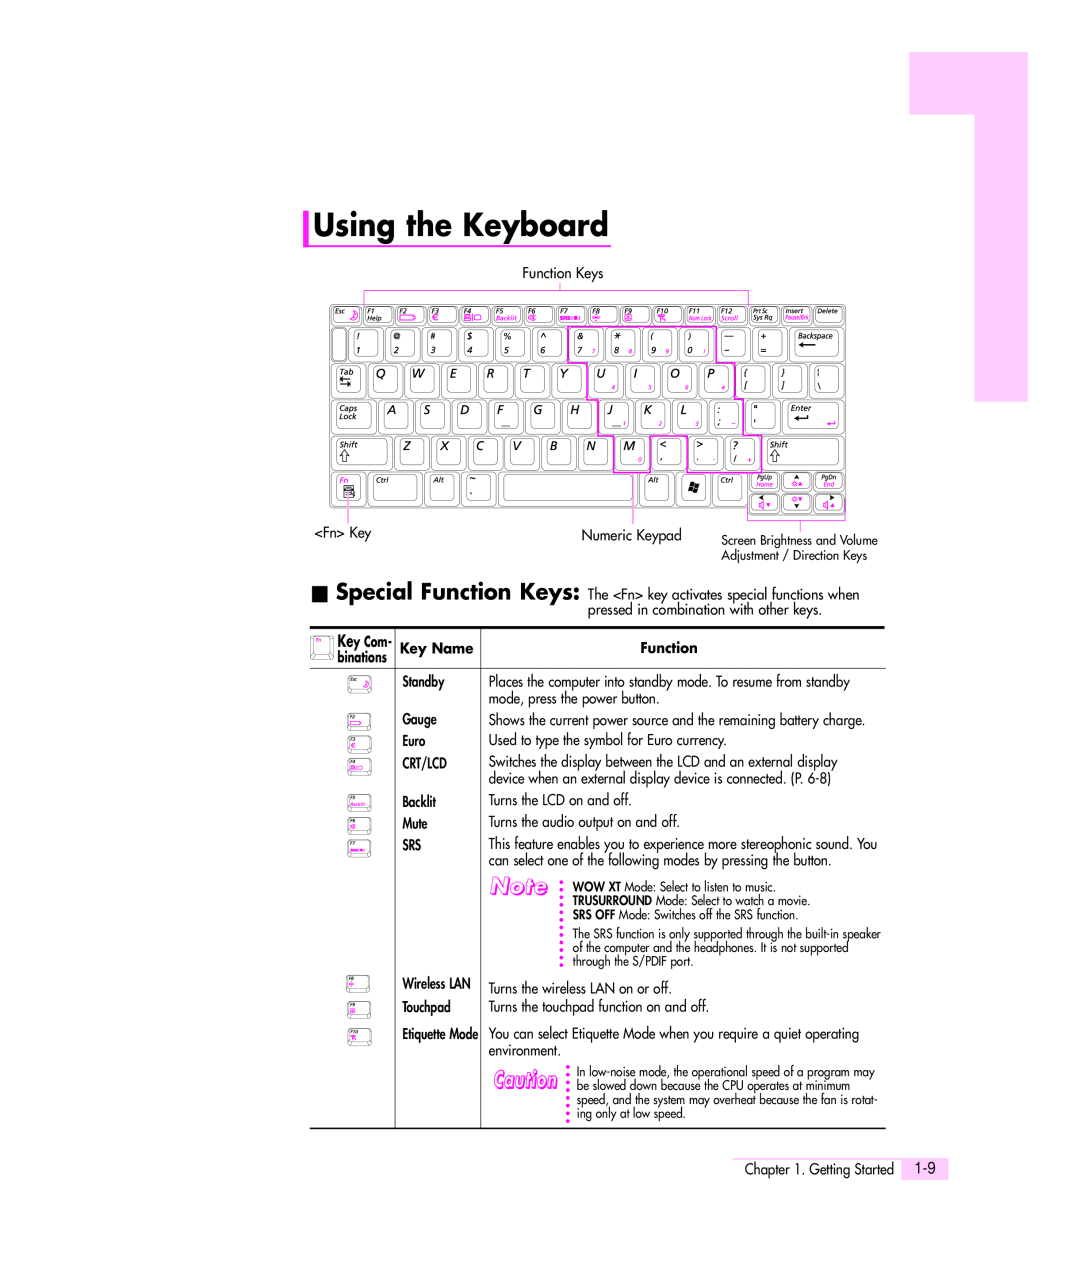 Samsung Q35 manual Using the Keyboard, Key Name, Function 